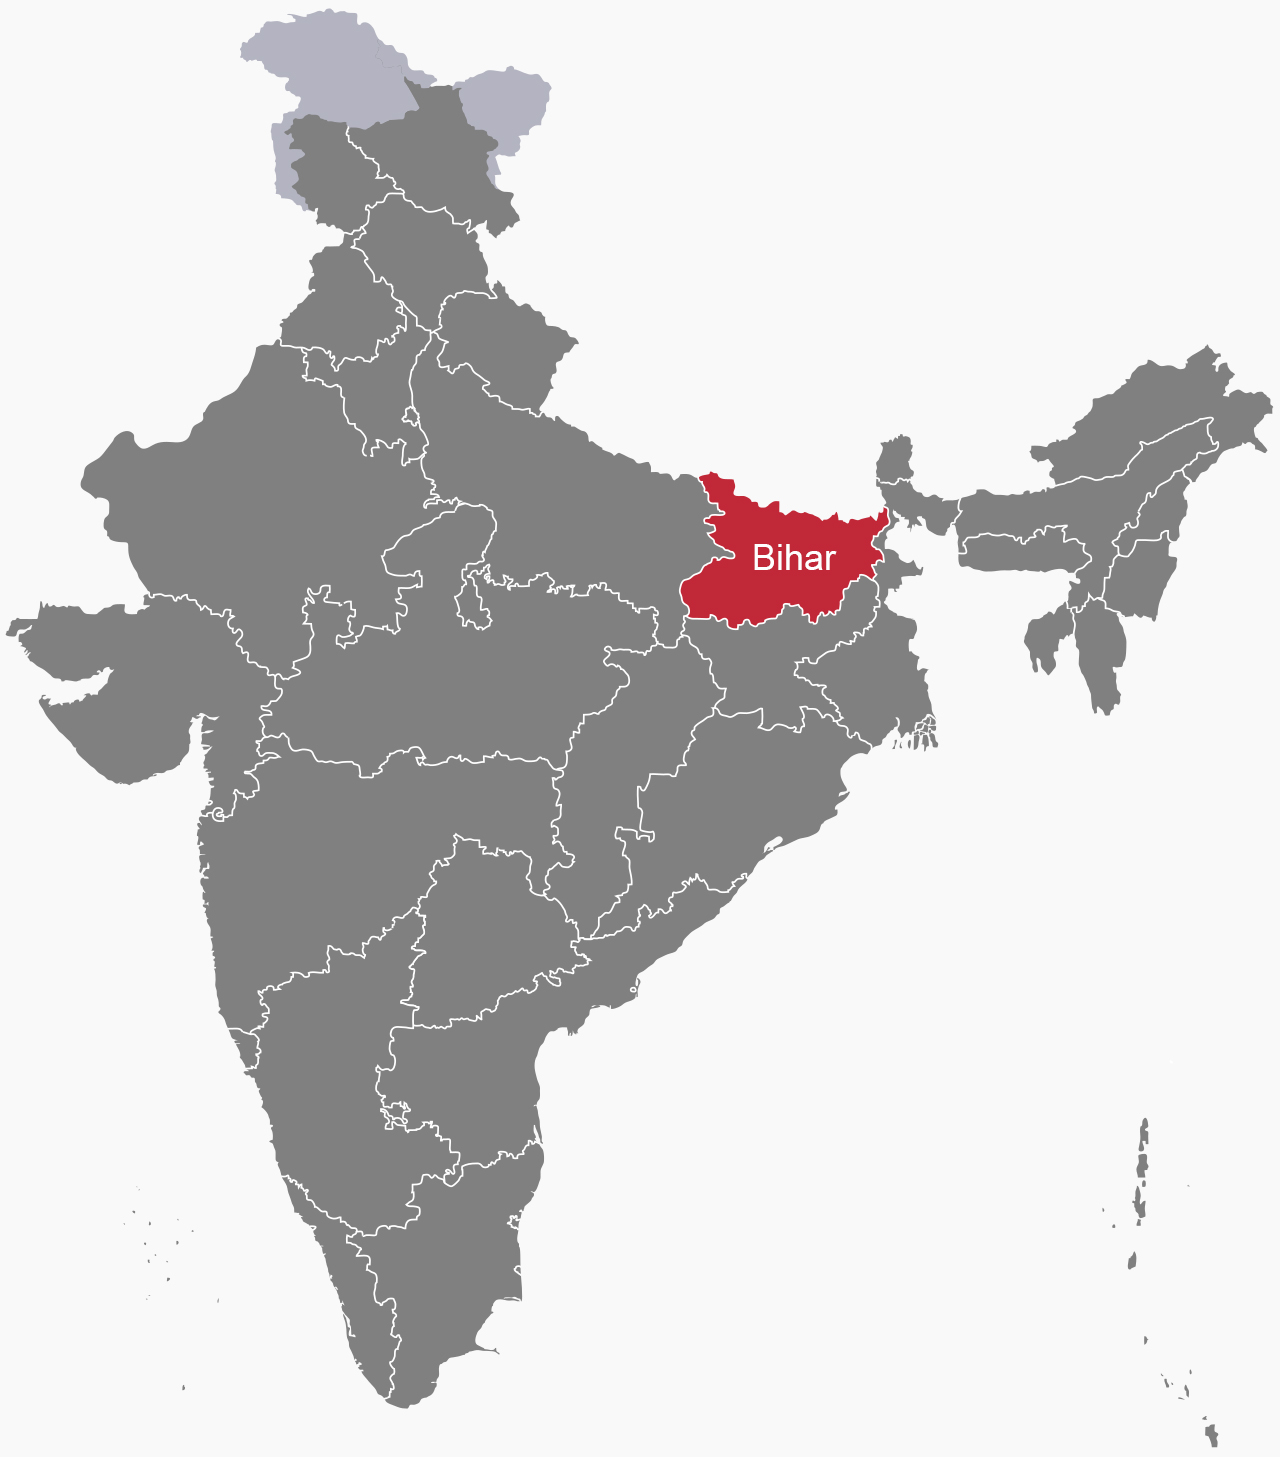 Map showing Bihar in northeastern India